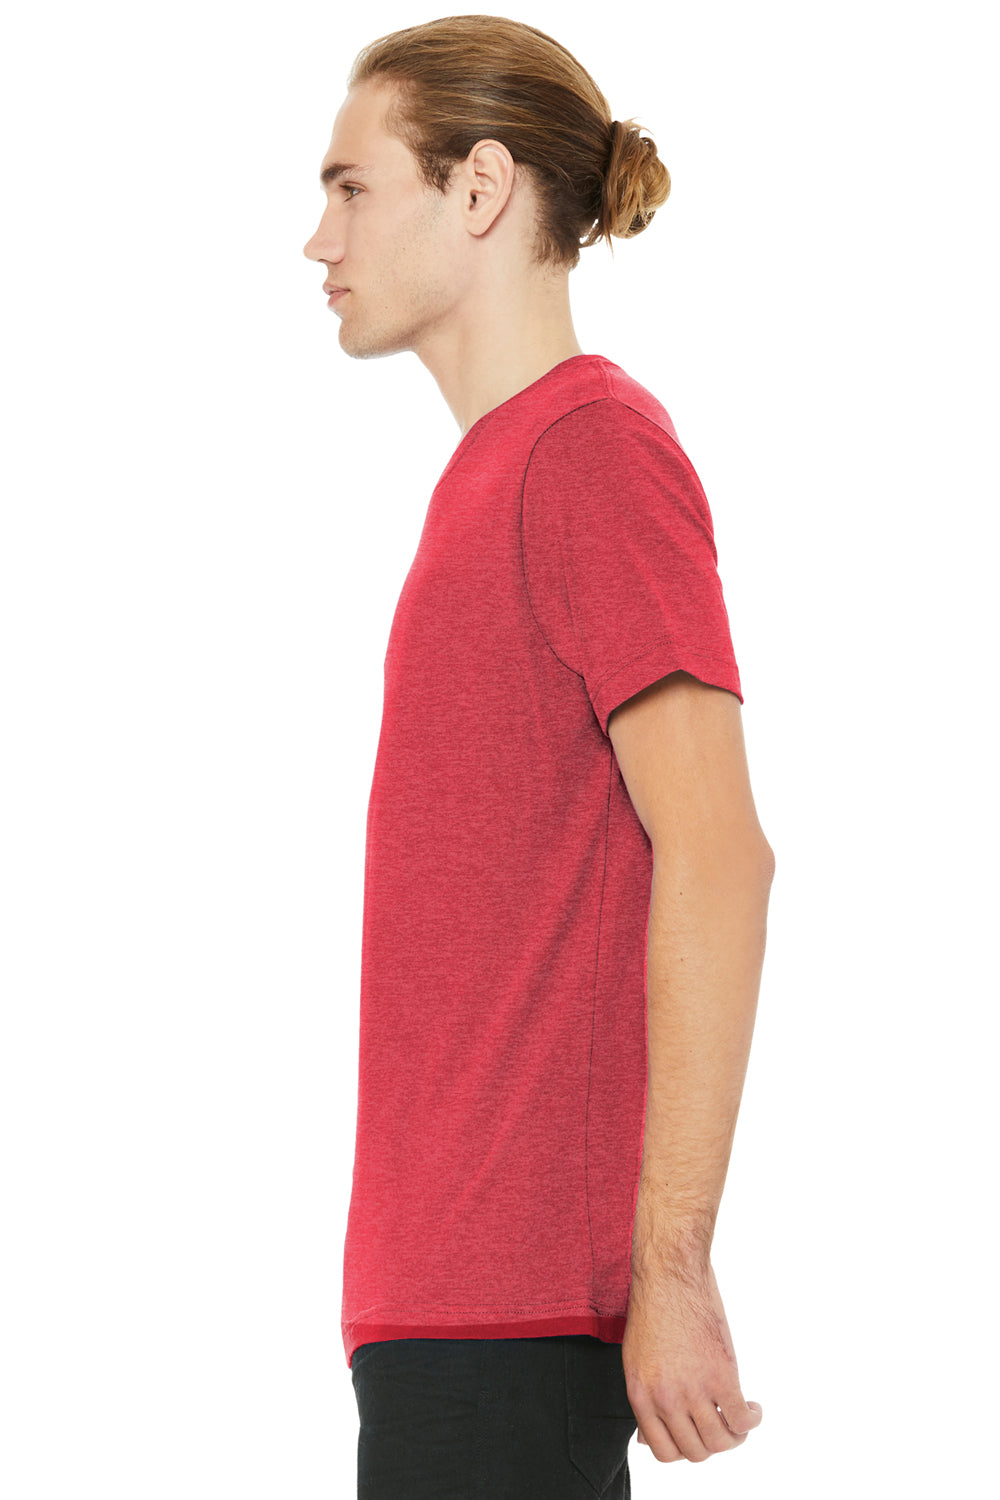 Bella + Canvas BC3005CVC Mens CVC Short Sleeve V-Neck T-Shirt Heather Red Model Side